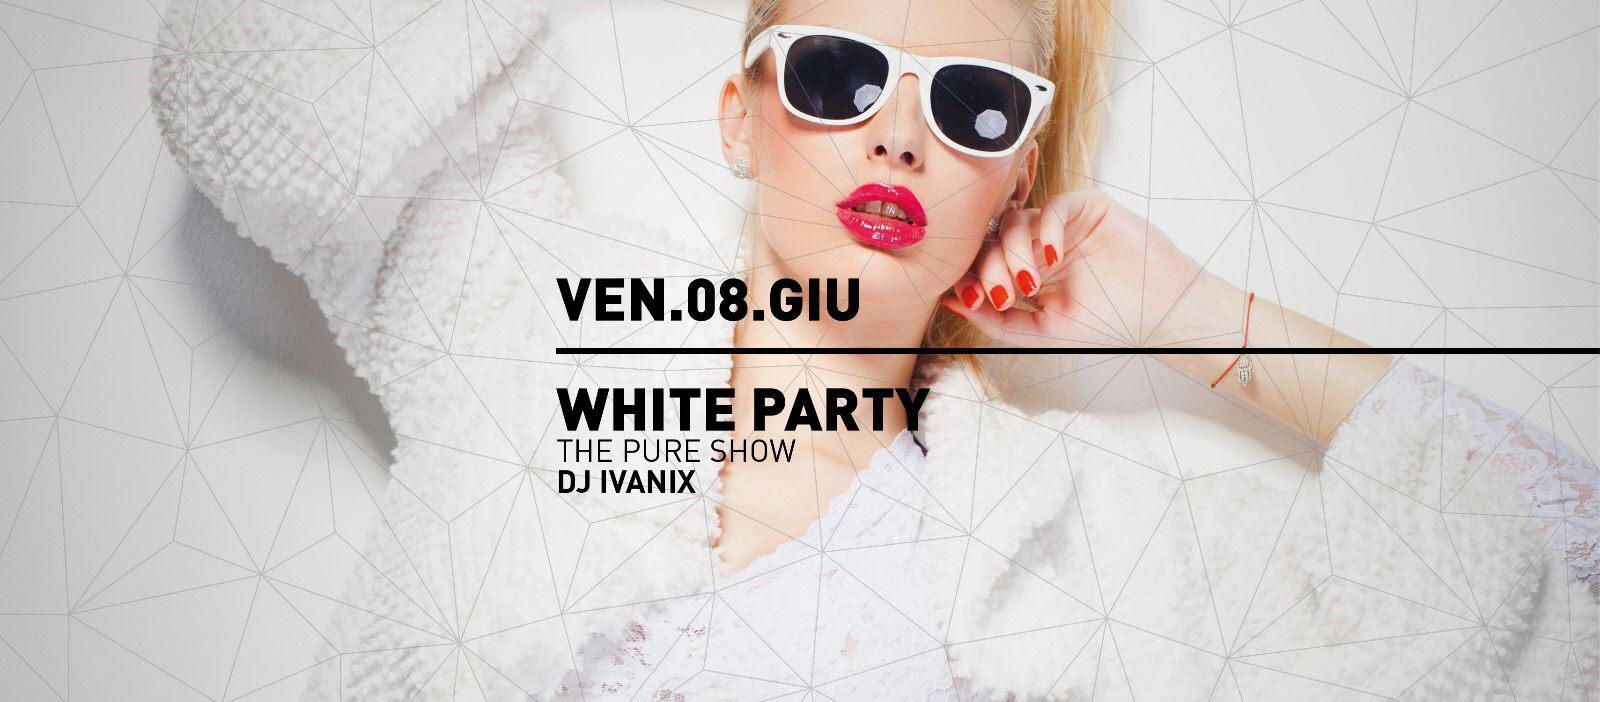 8/6 White Party @ Life Club - Rovetta (BG) con IvaniX, voice Matteo Palumbo / Live Happy Hour con Ligabue Tribute